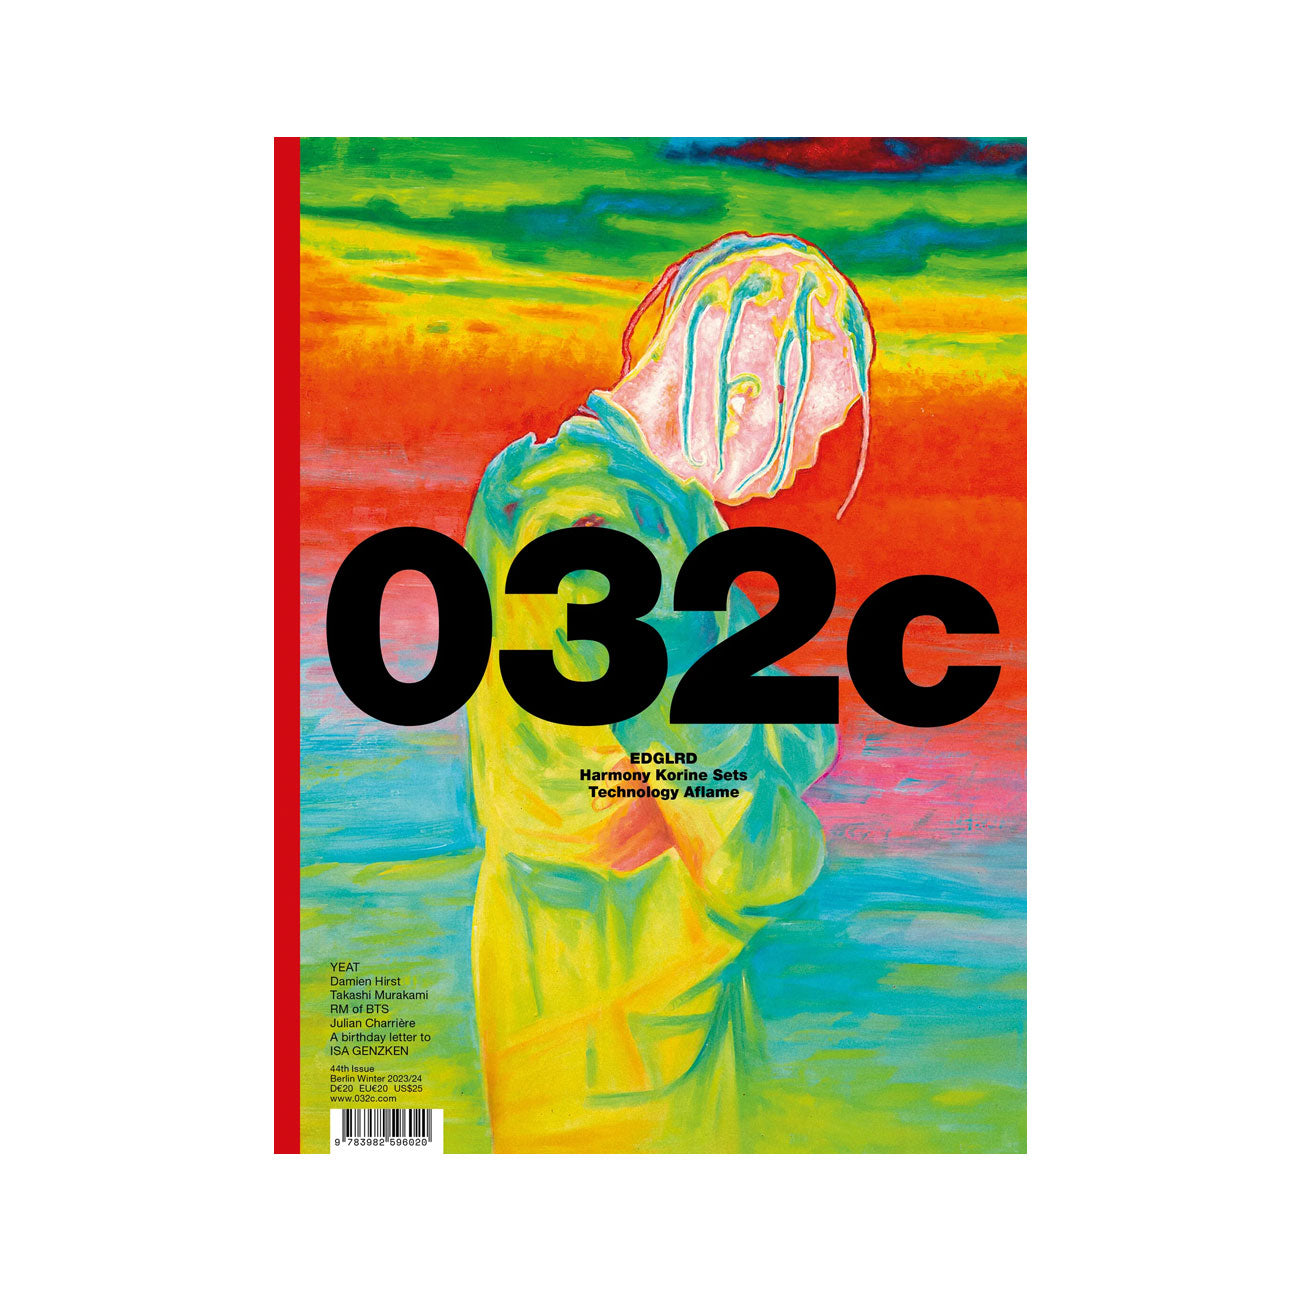 032c issue #44 winter 2023/2024: “edglrd” - a.plus store